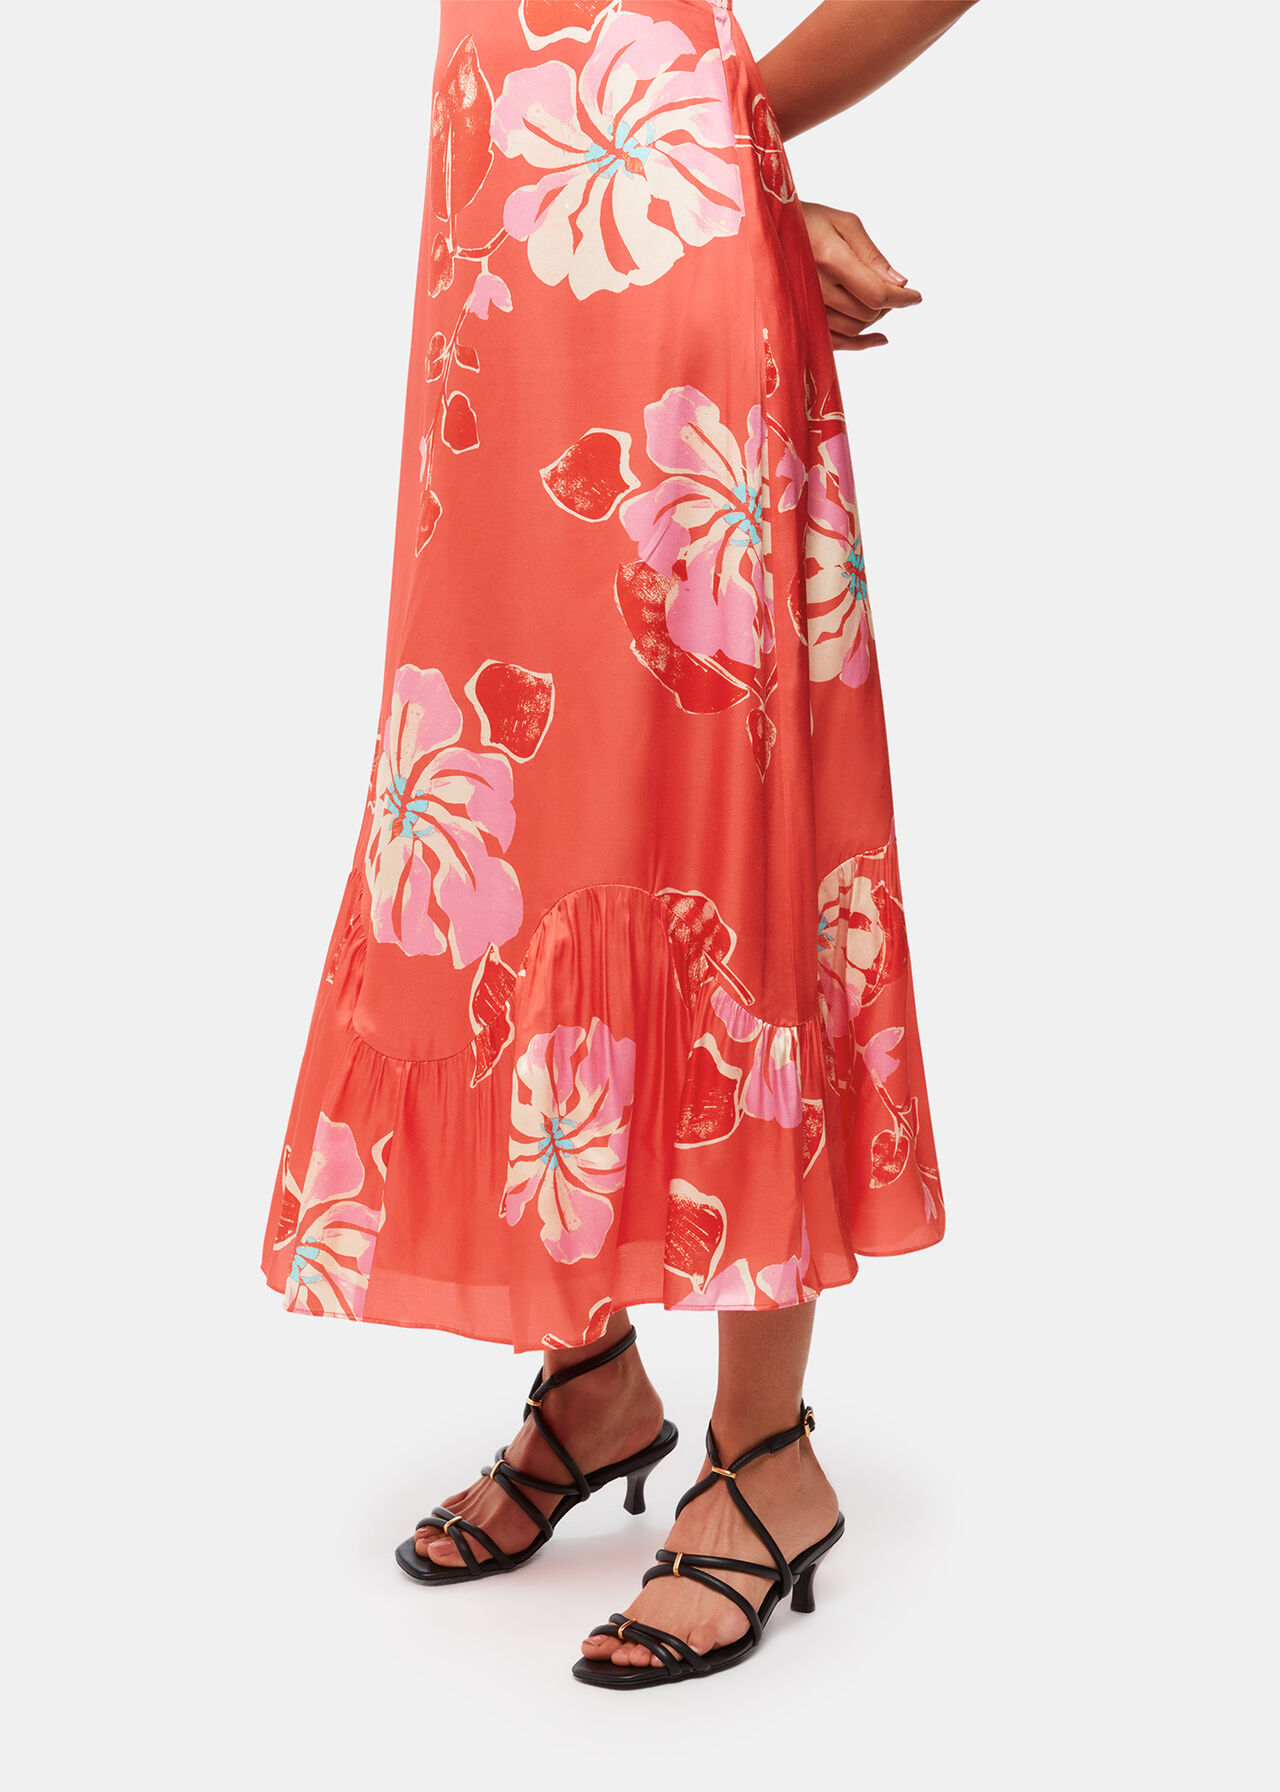 Hibiscus Print Raffa Dress